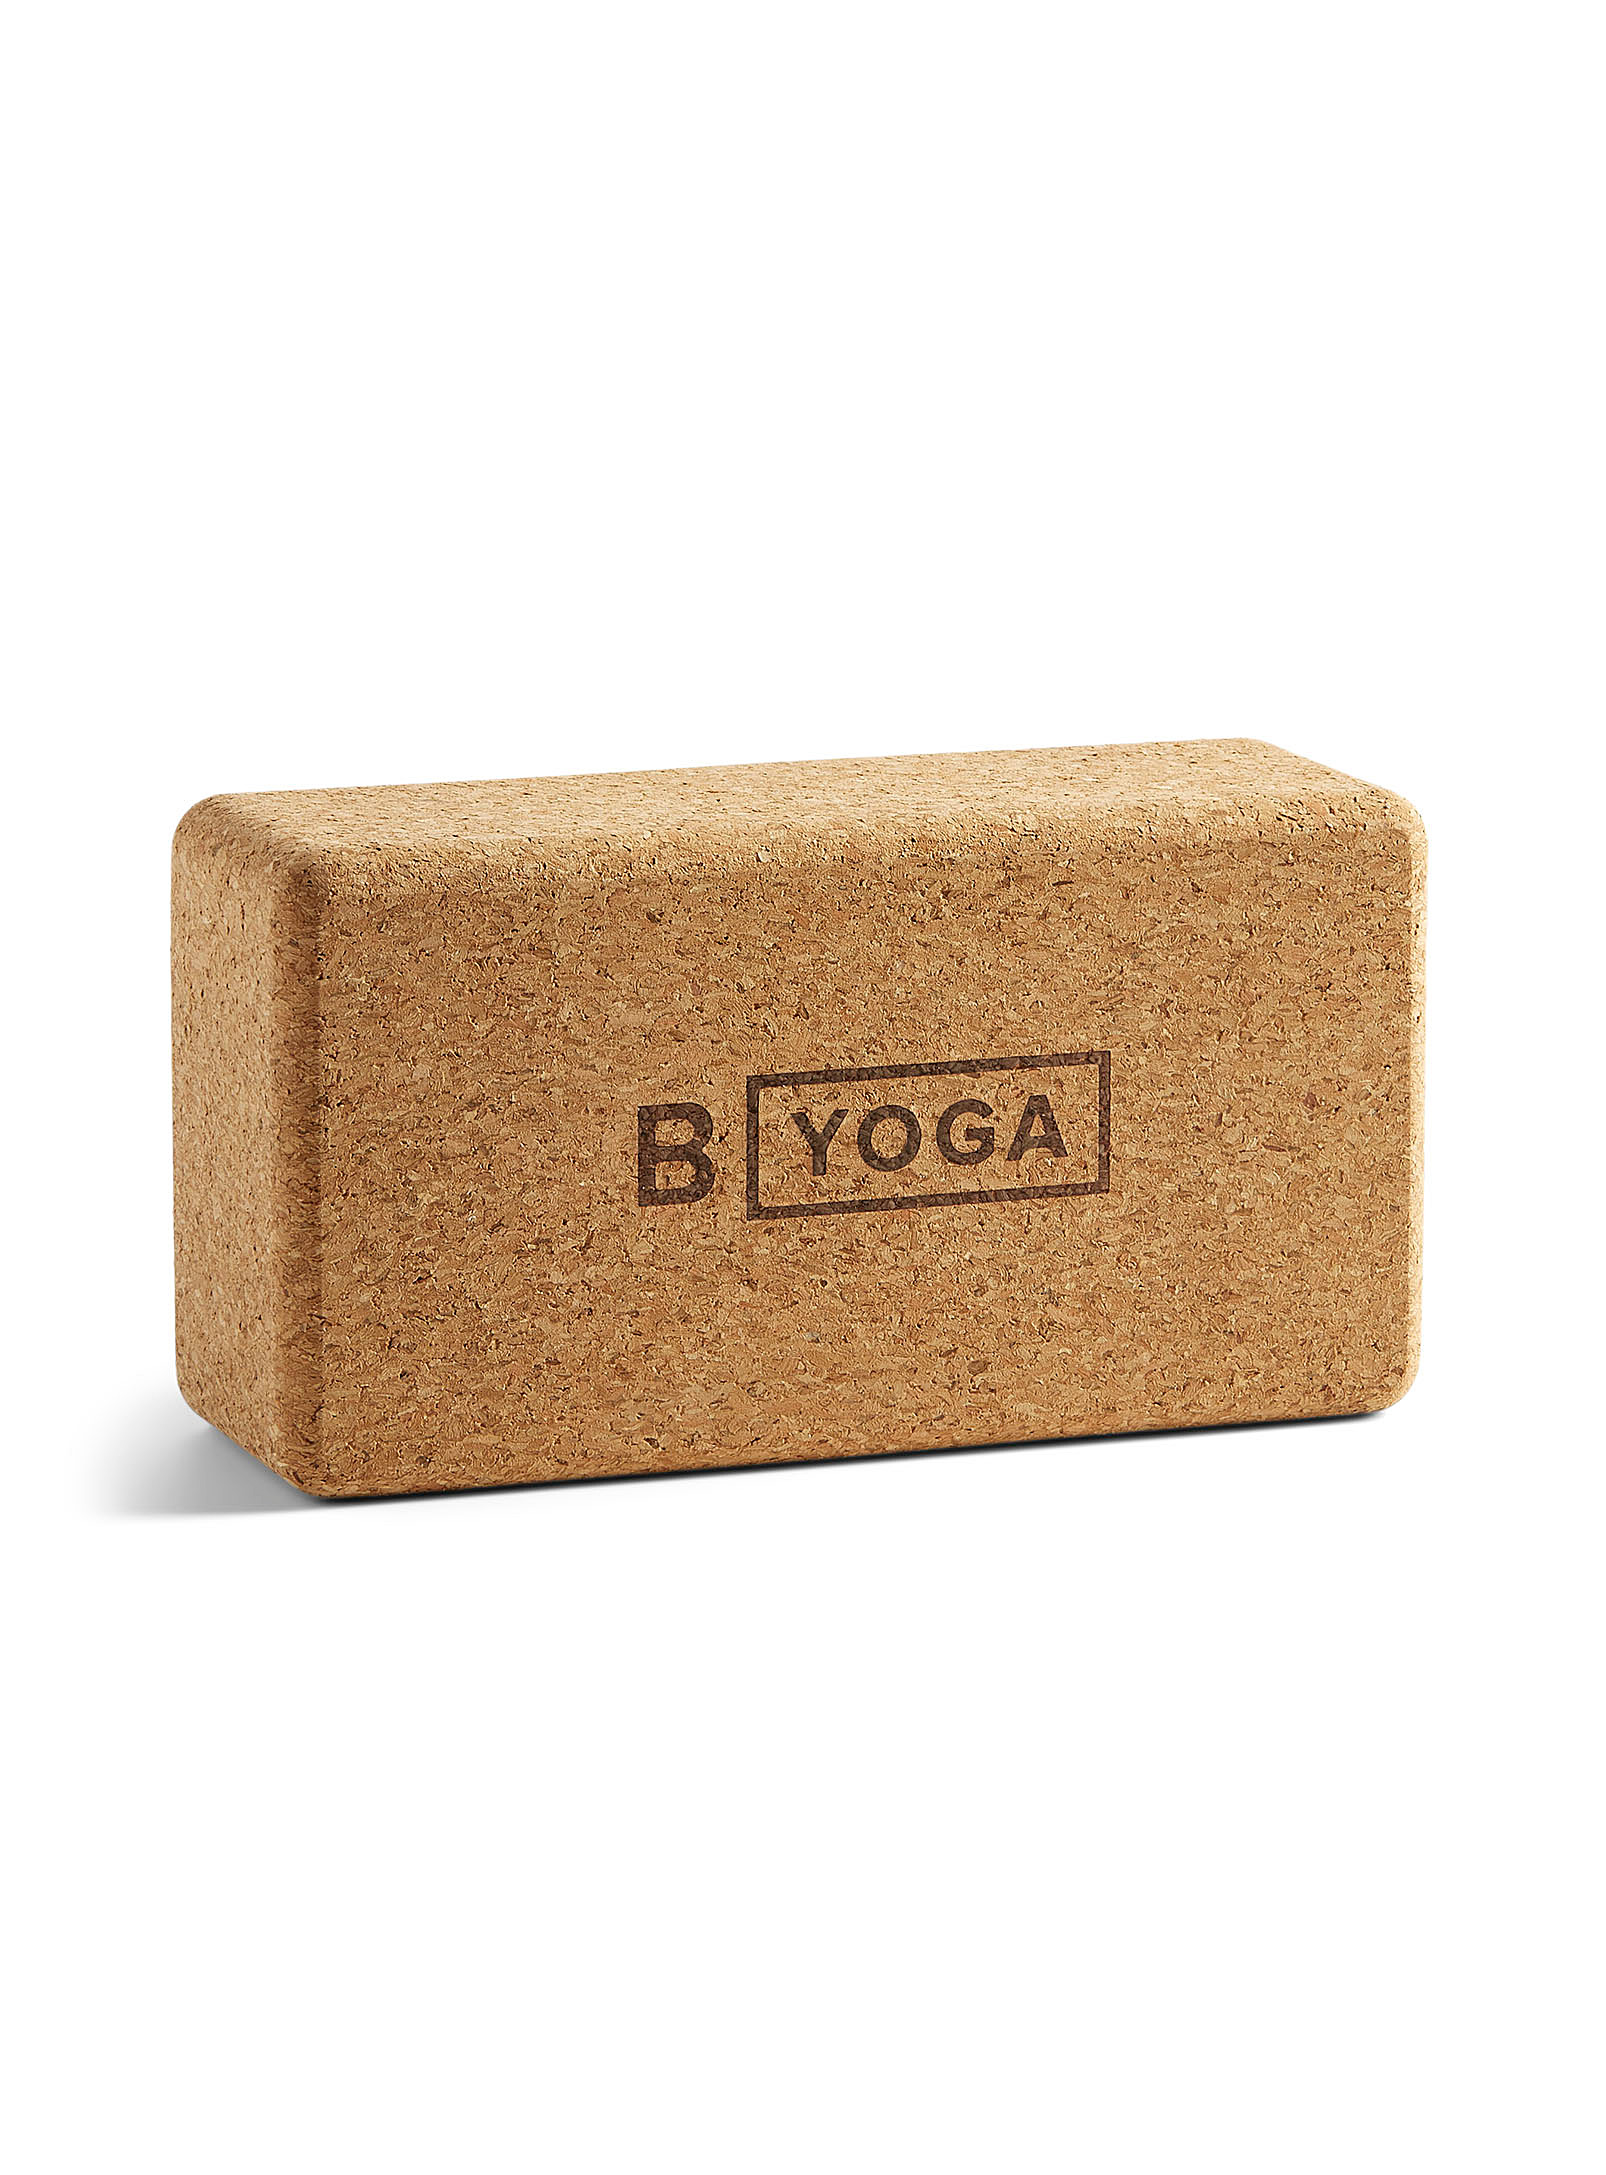 B Yoga Cork Support Block In Gold